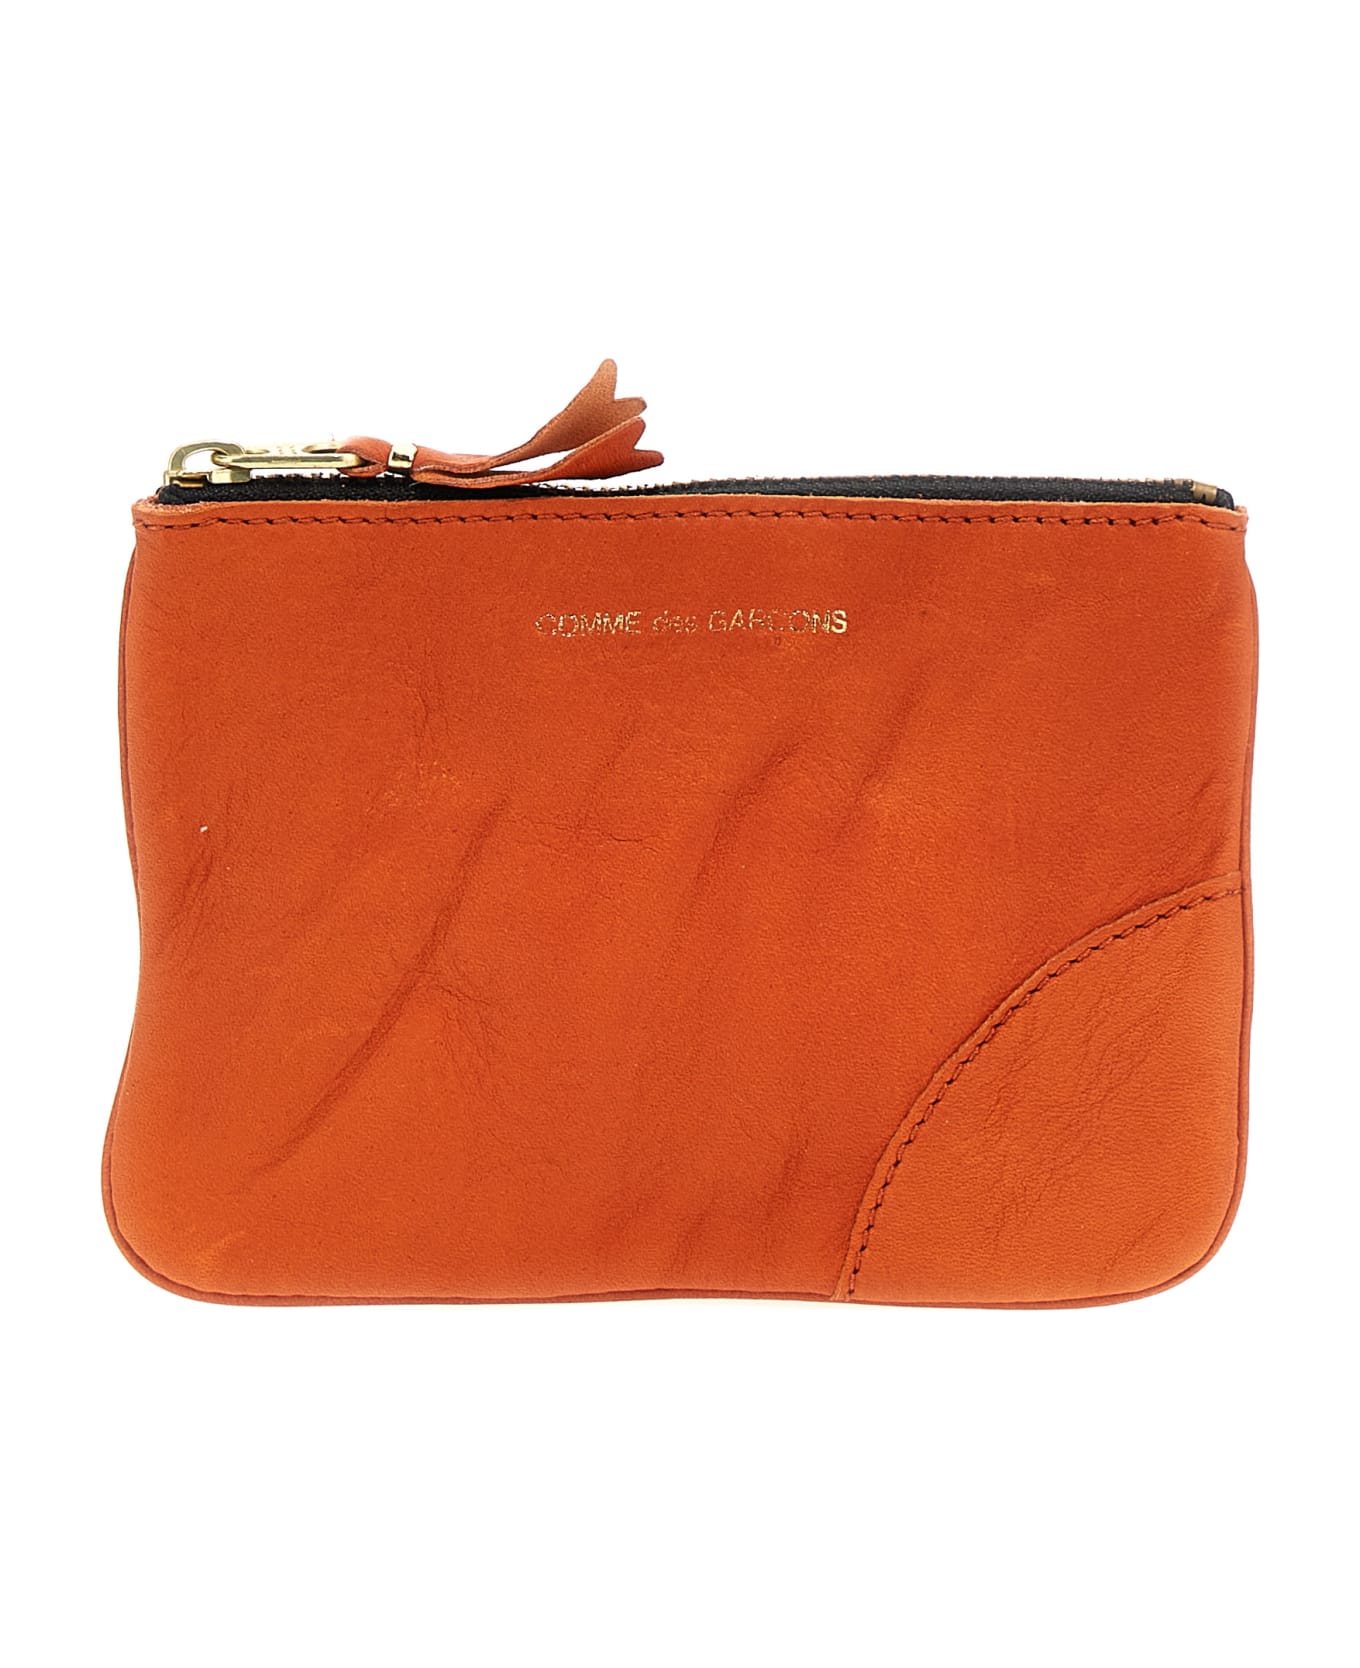 Comme des Garçons Wallet 'washed' Wallet - Orange 財布